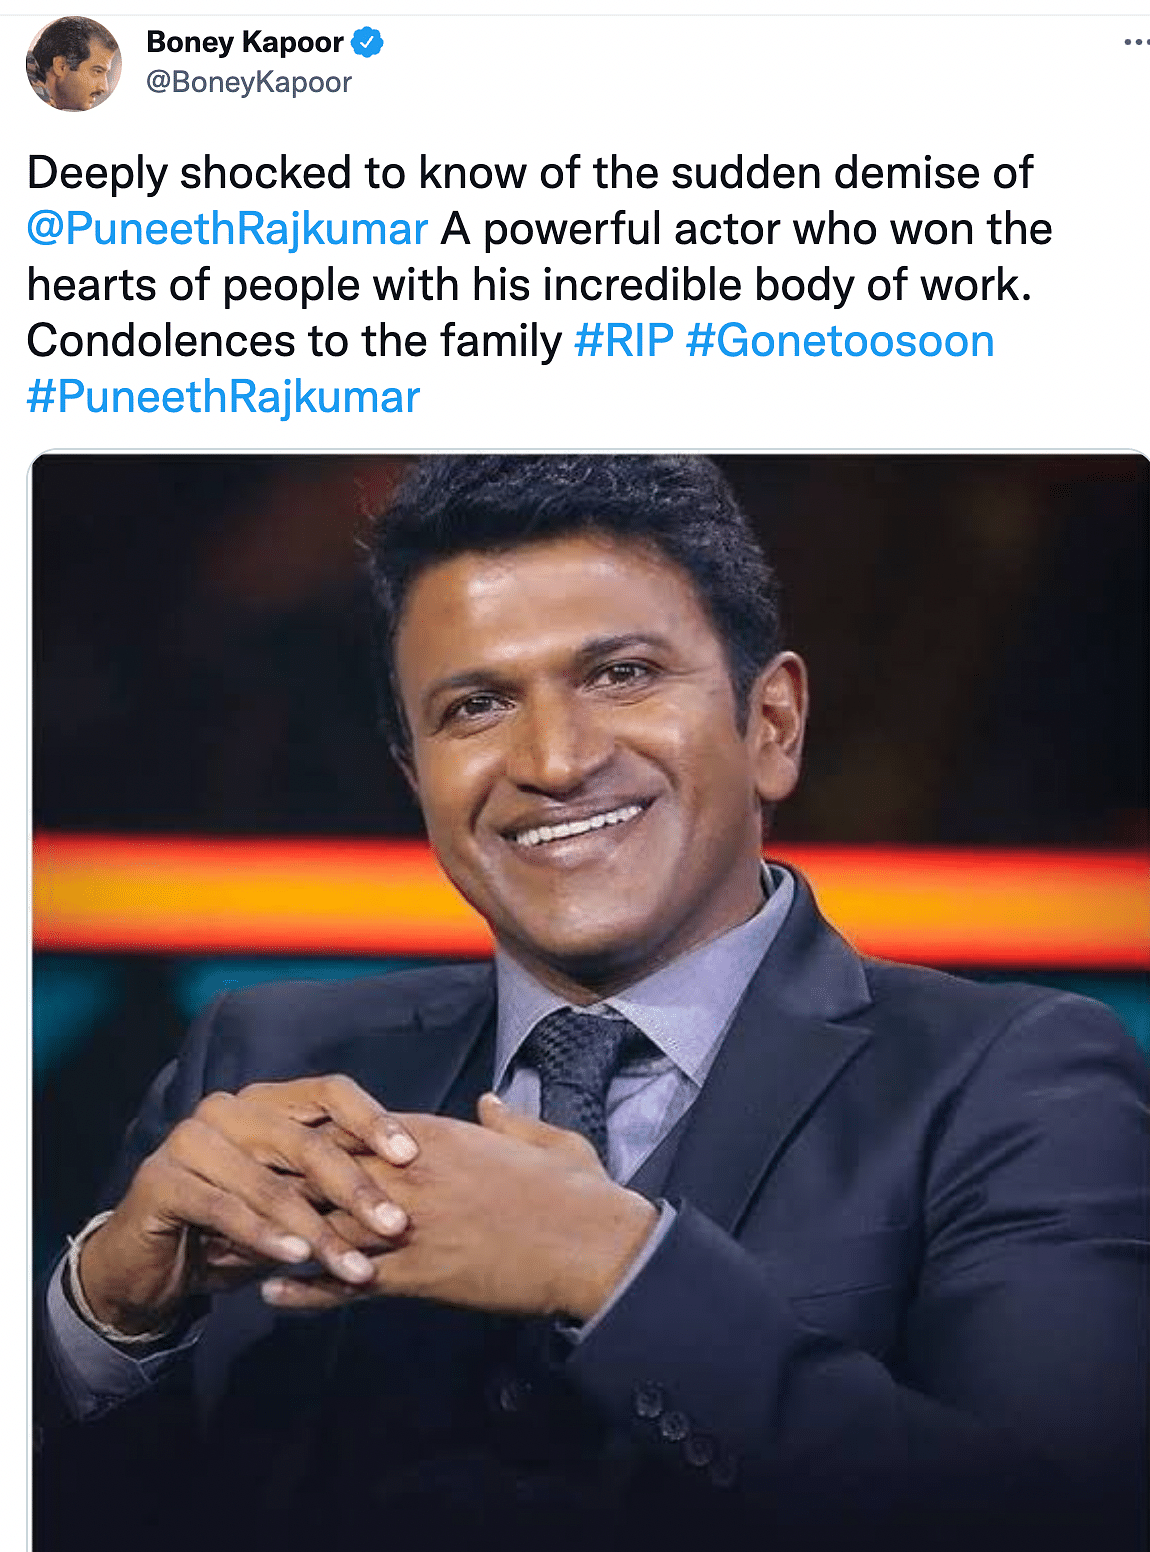 Puneeth Rajkumar passed away at the age of 46.